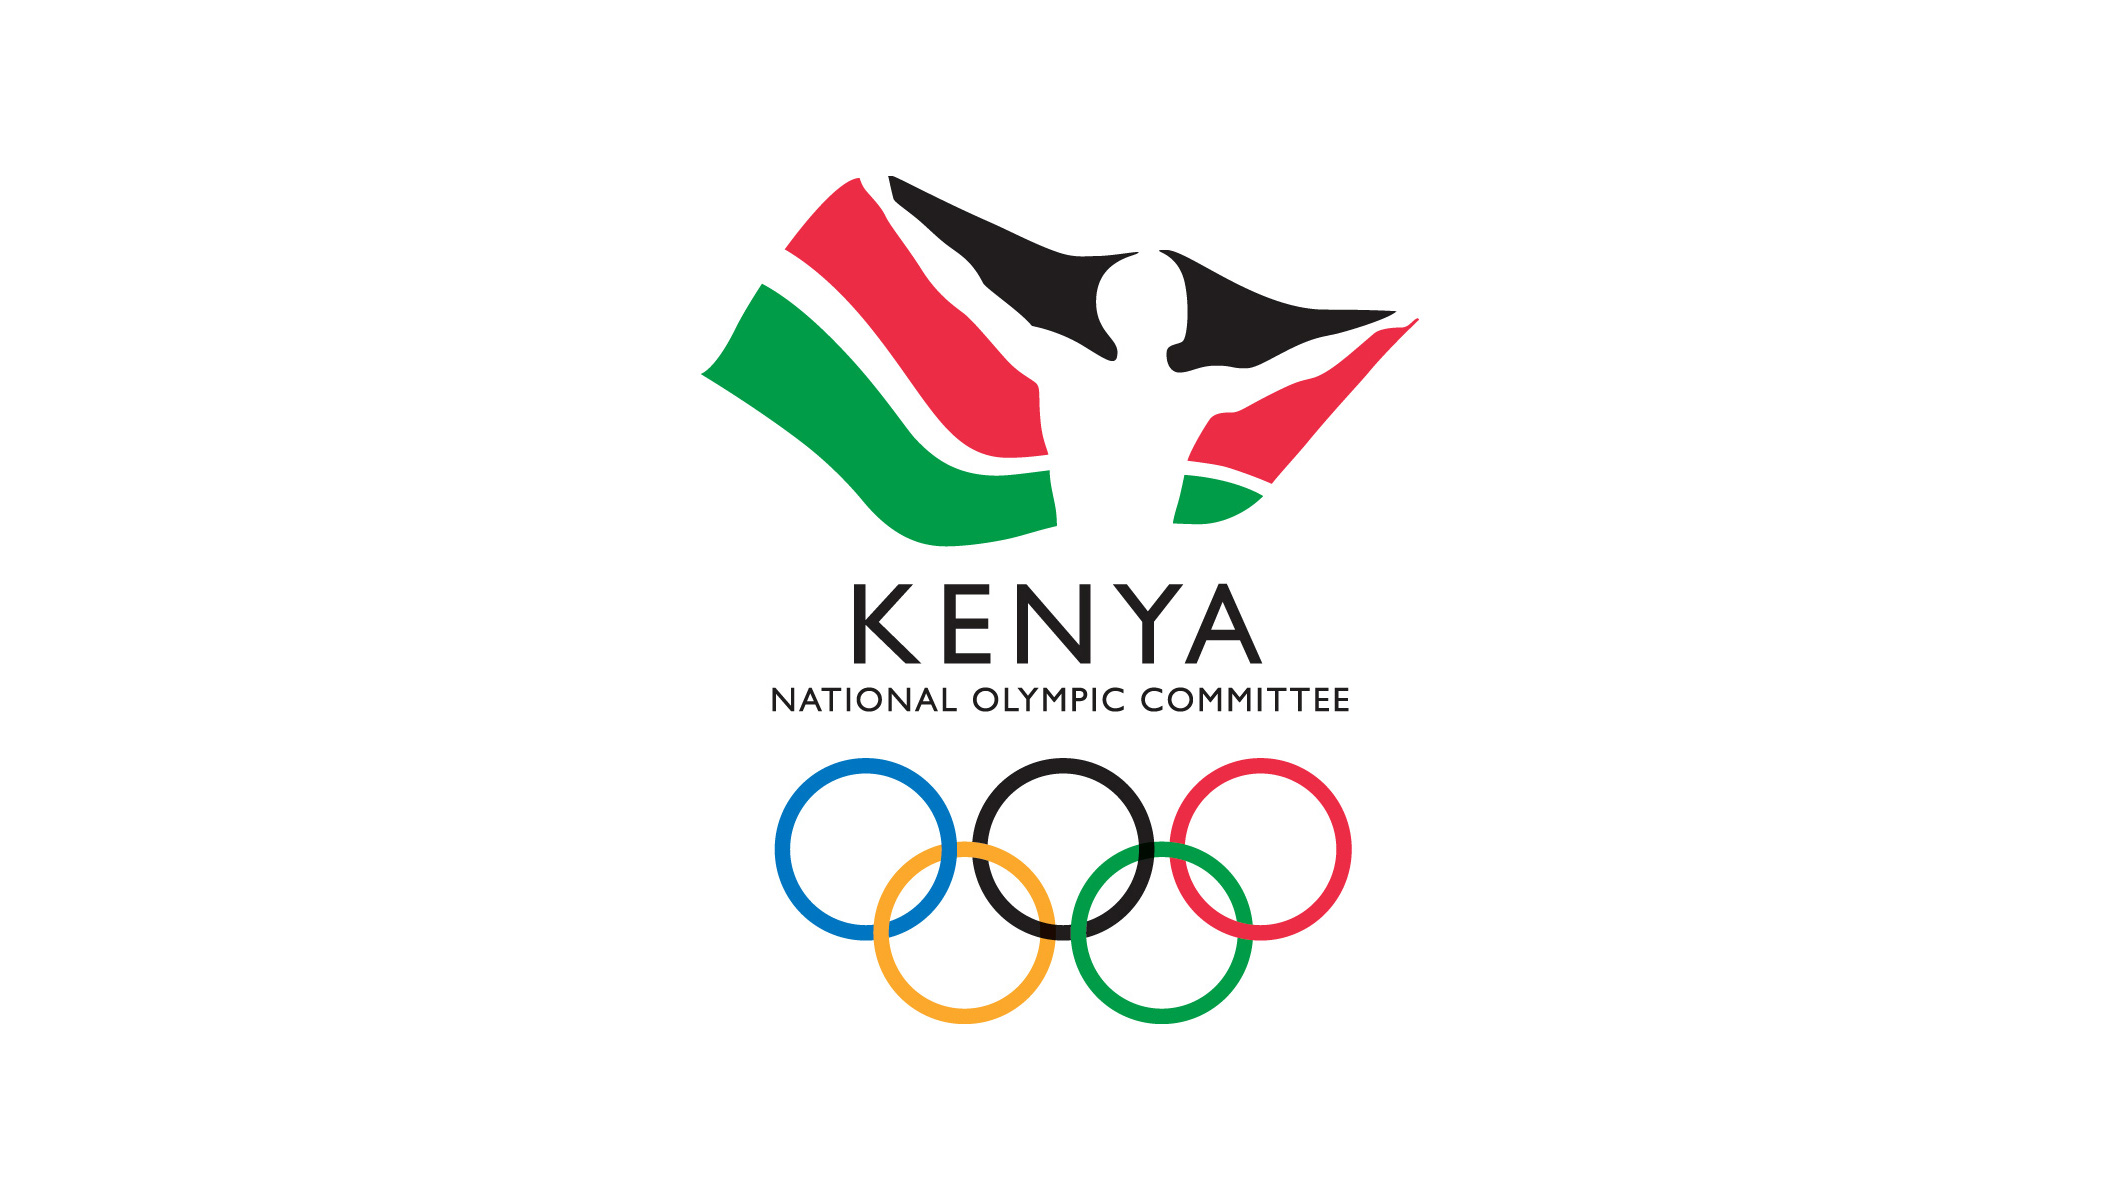 Kenya National Olympic Committee (NOC)